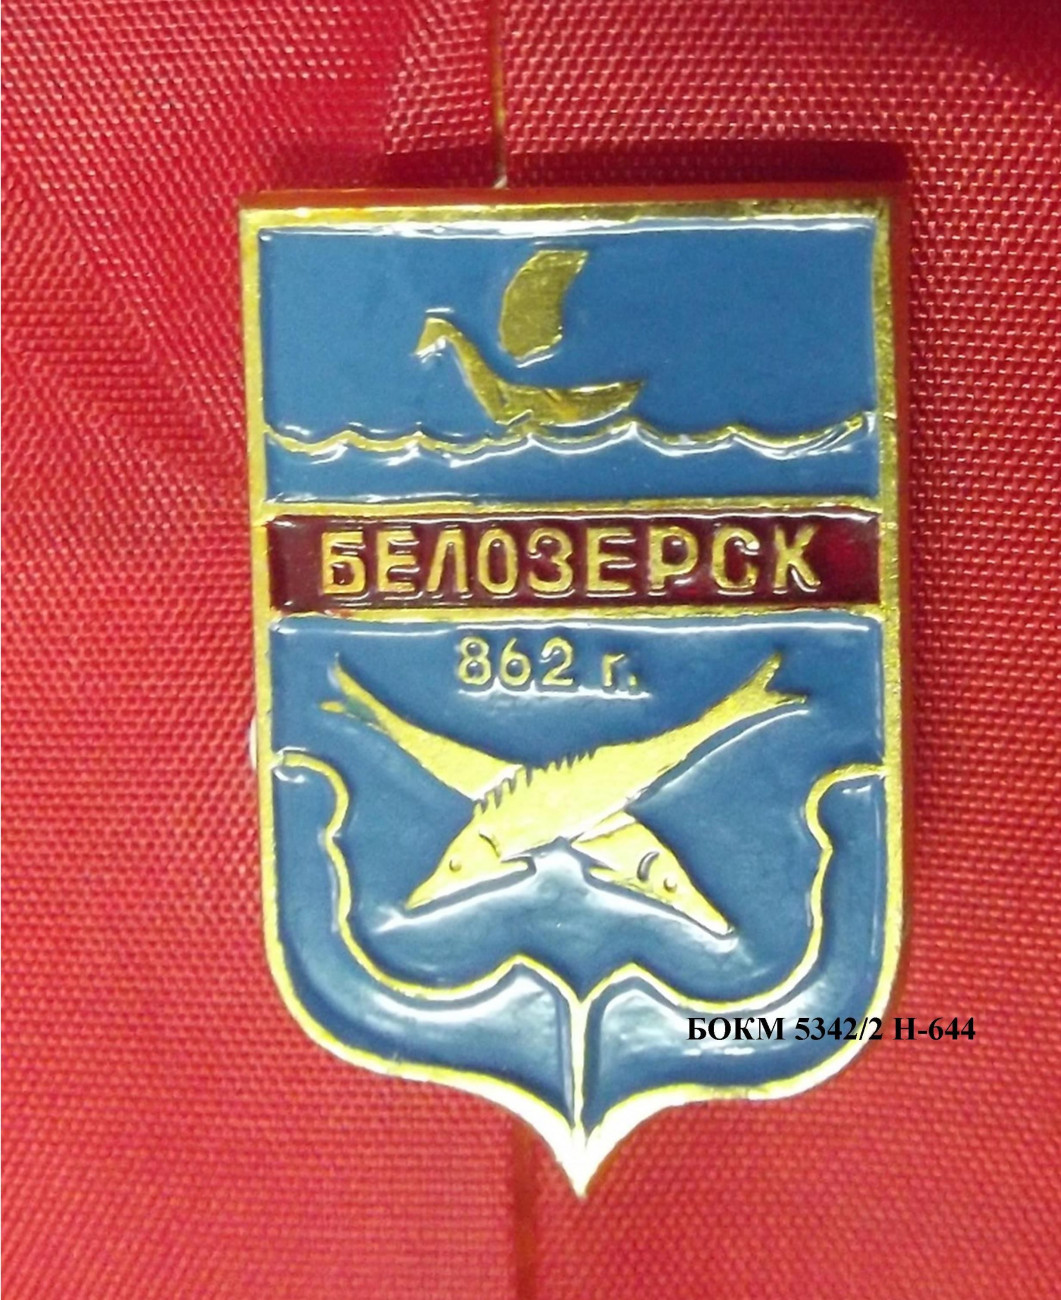 Значок нагрудный «Белозерск» 1980 гг. Металл, краска, штамповка. 3,1 х 2 х 0,5 см. Вологодская обл. БОКМ-5342/1 Н-644.